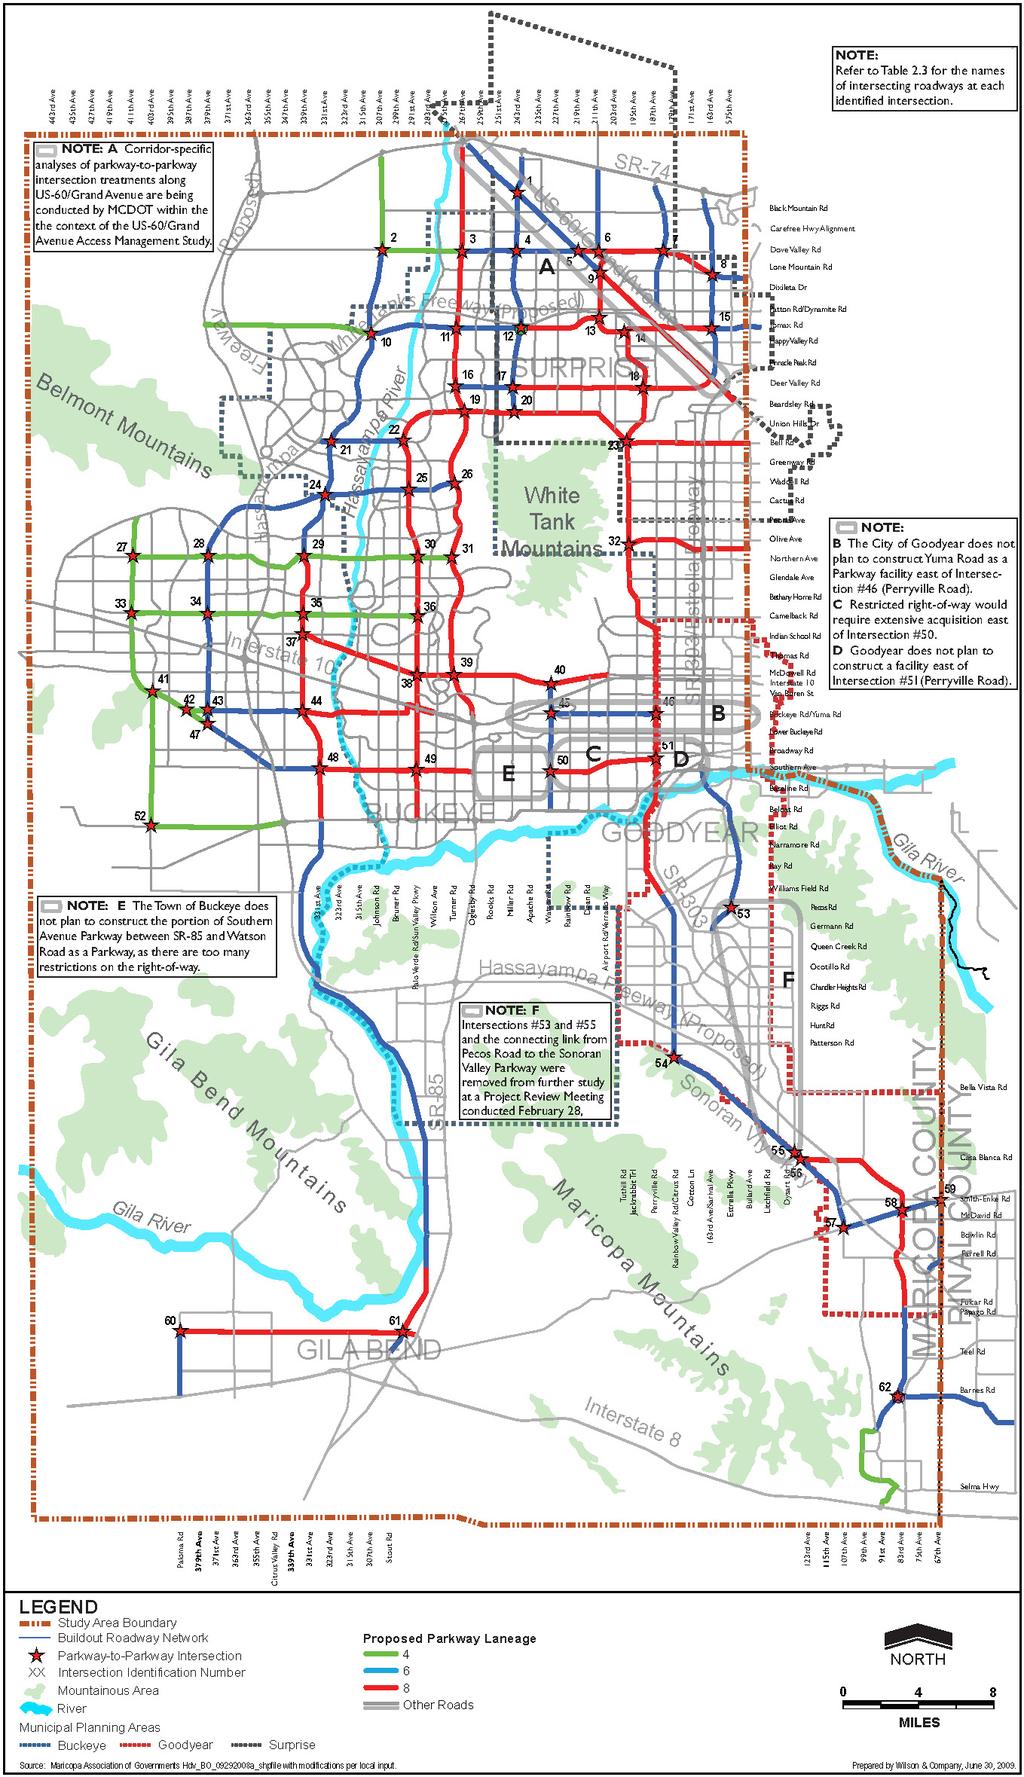 Arizona Parkway /Interchange - Operational Analysis and Design Concepts